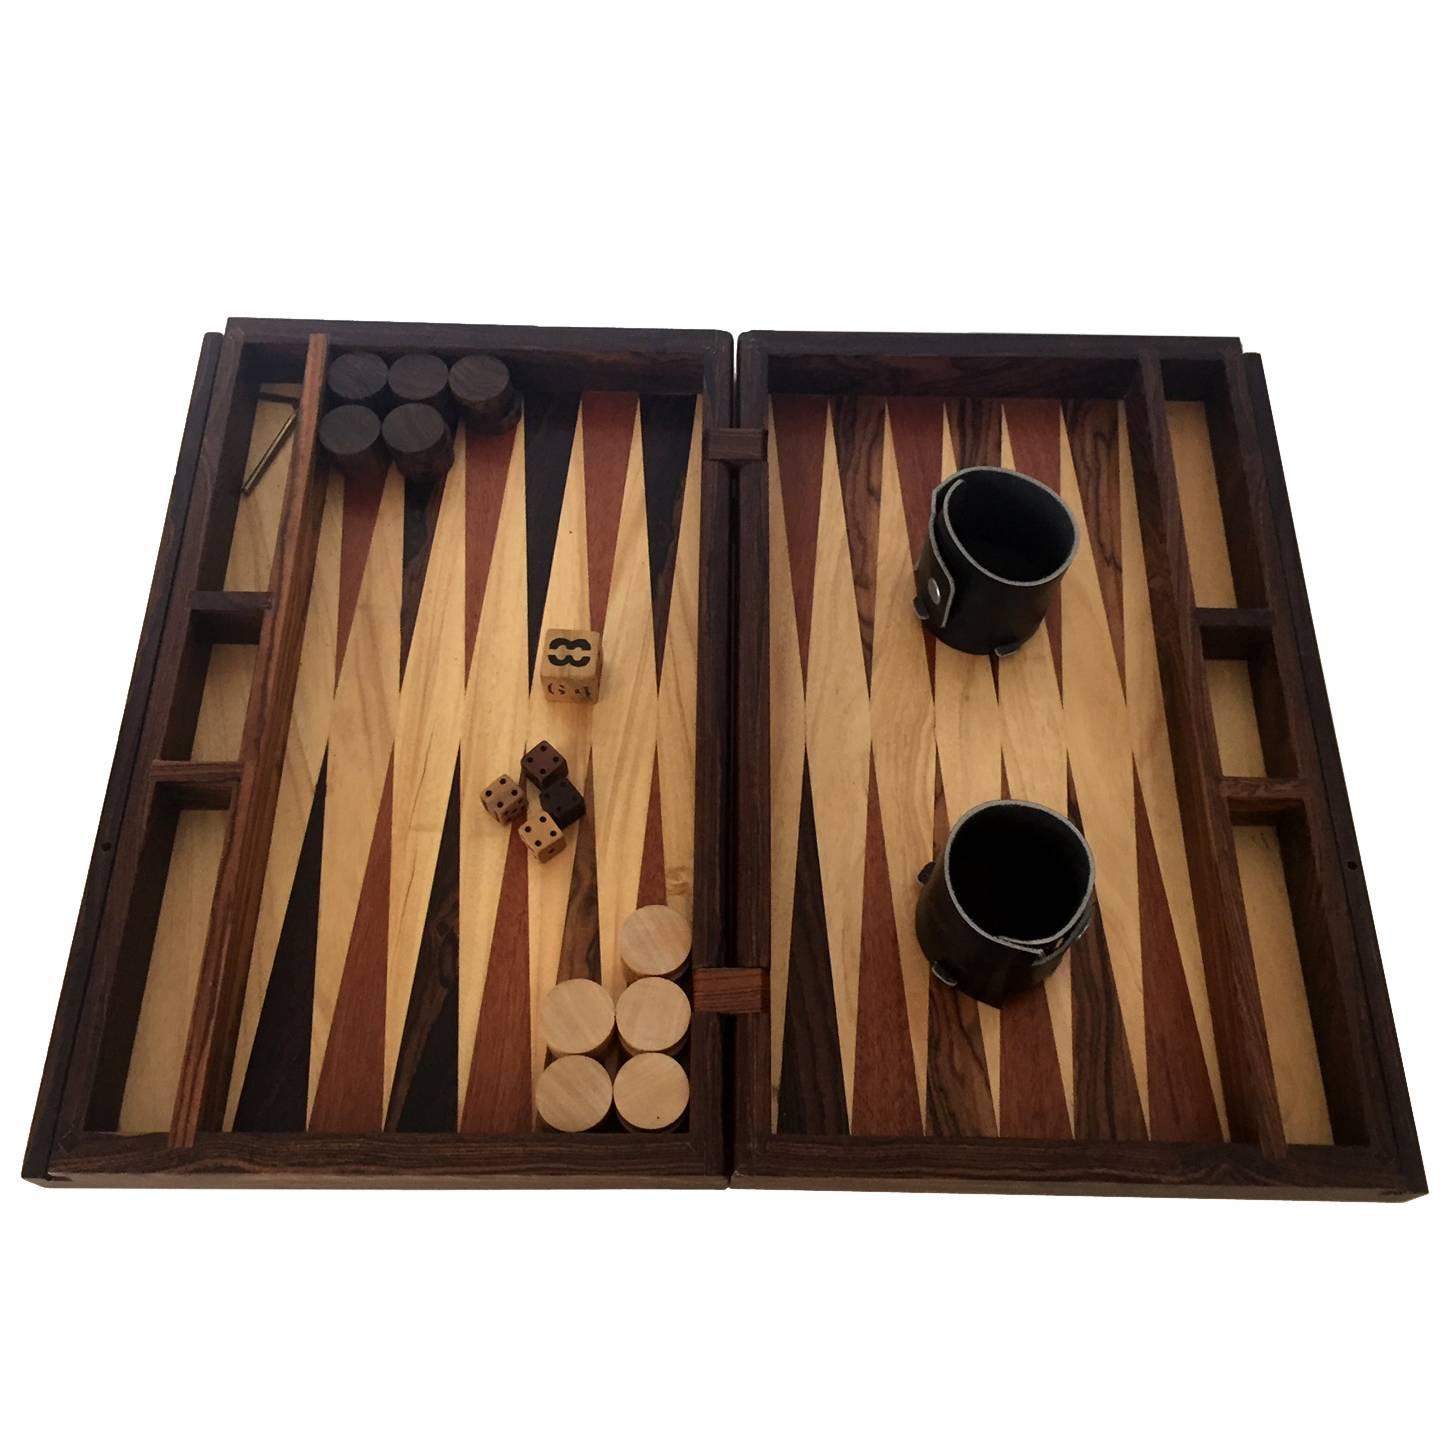 Handmade Backgammon Game Set by Don Shoemaker